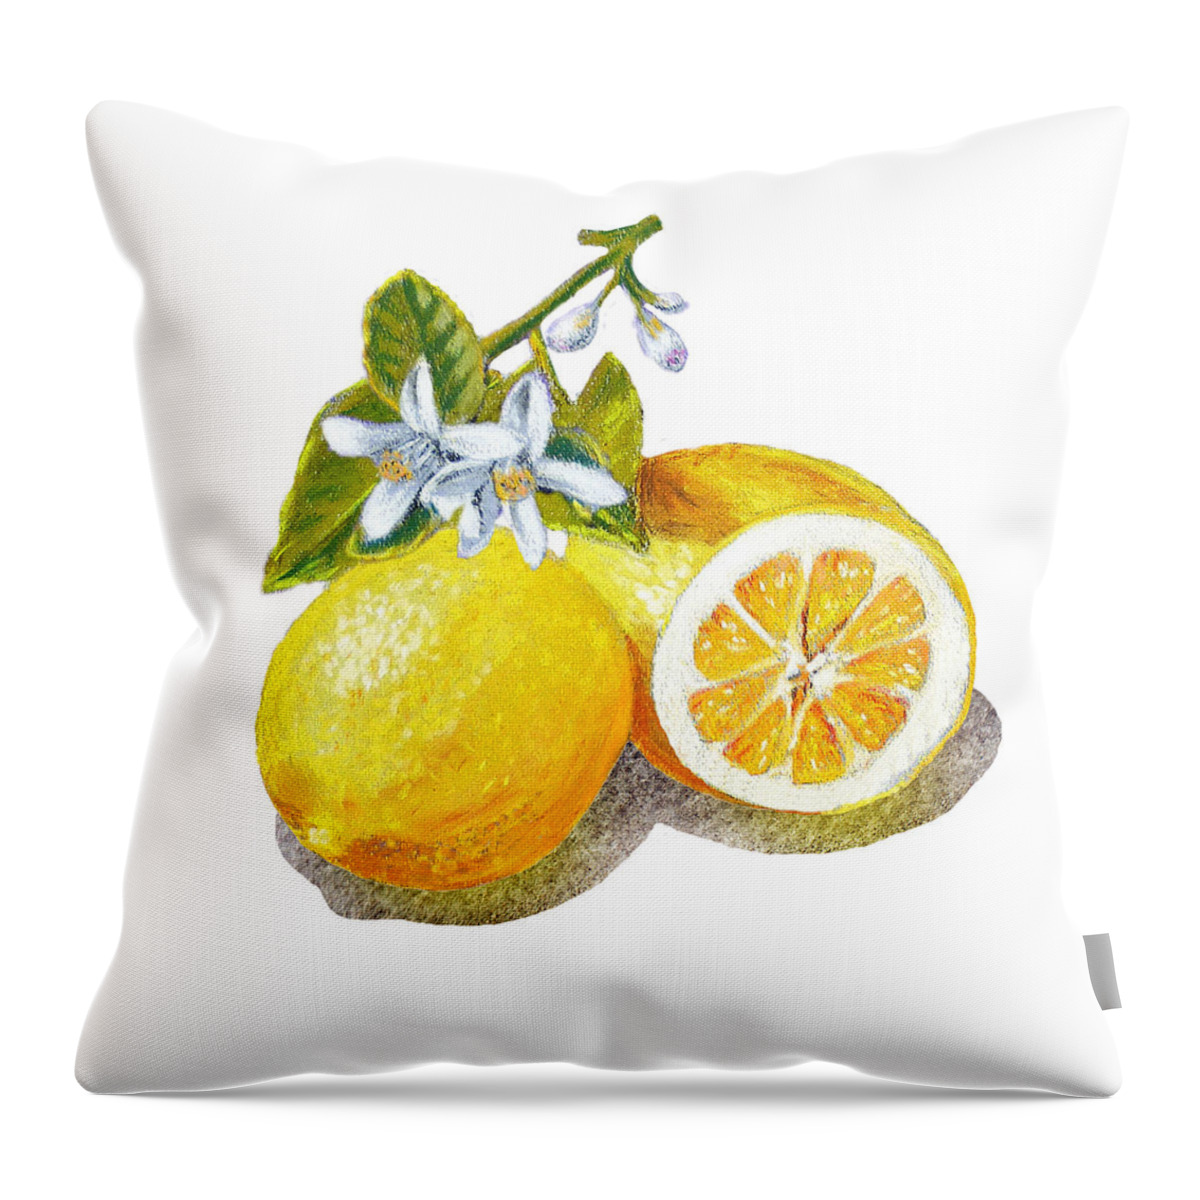 Lemon Throw Pillow featuring the painting Two Happy Lemons by Irina Sztukowski